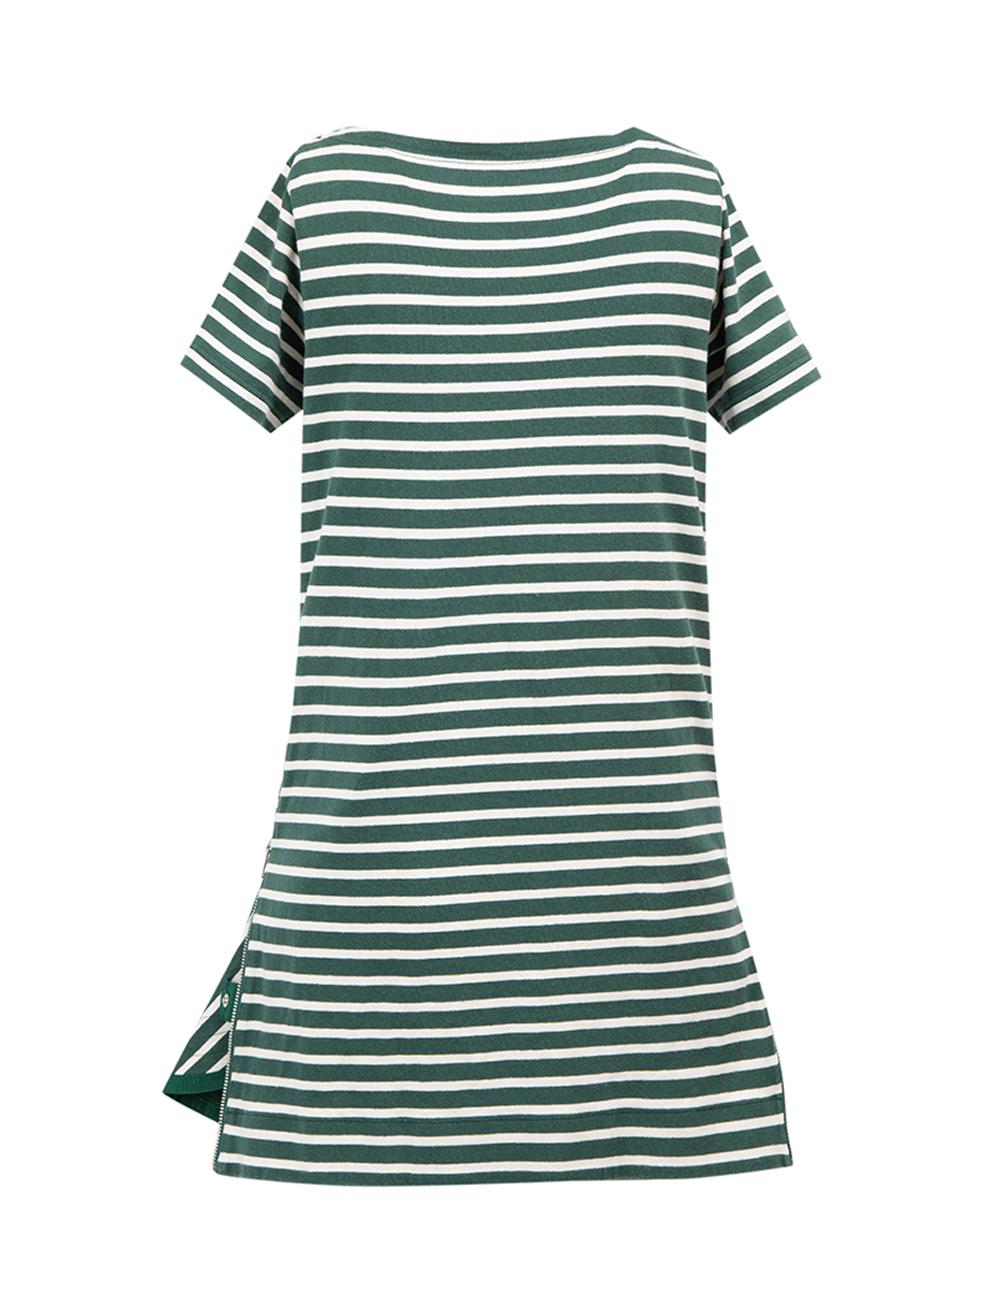 Gray Green & White Cotton Striped Zip Detail Dress Size S For Sale